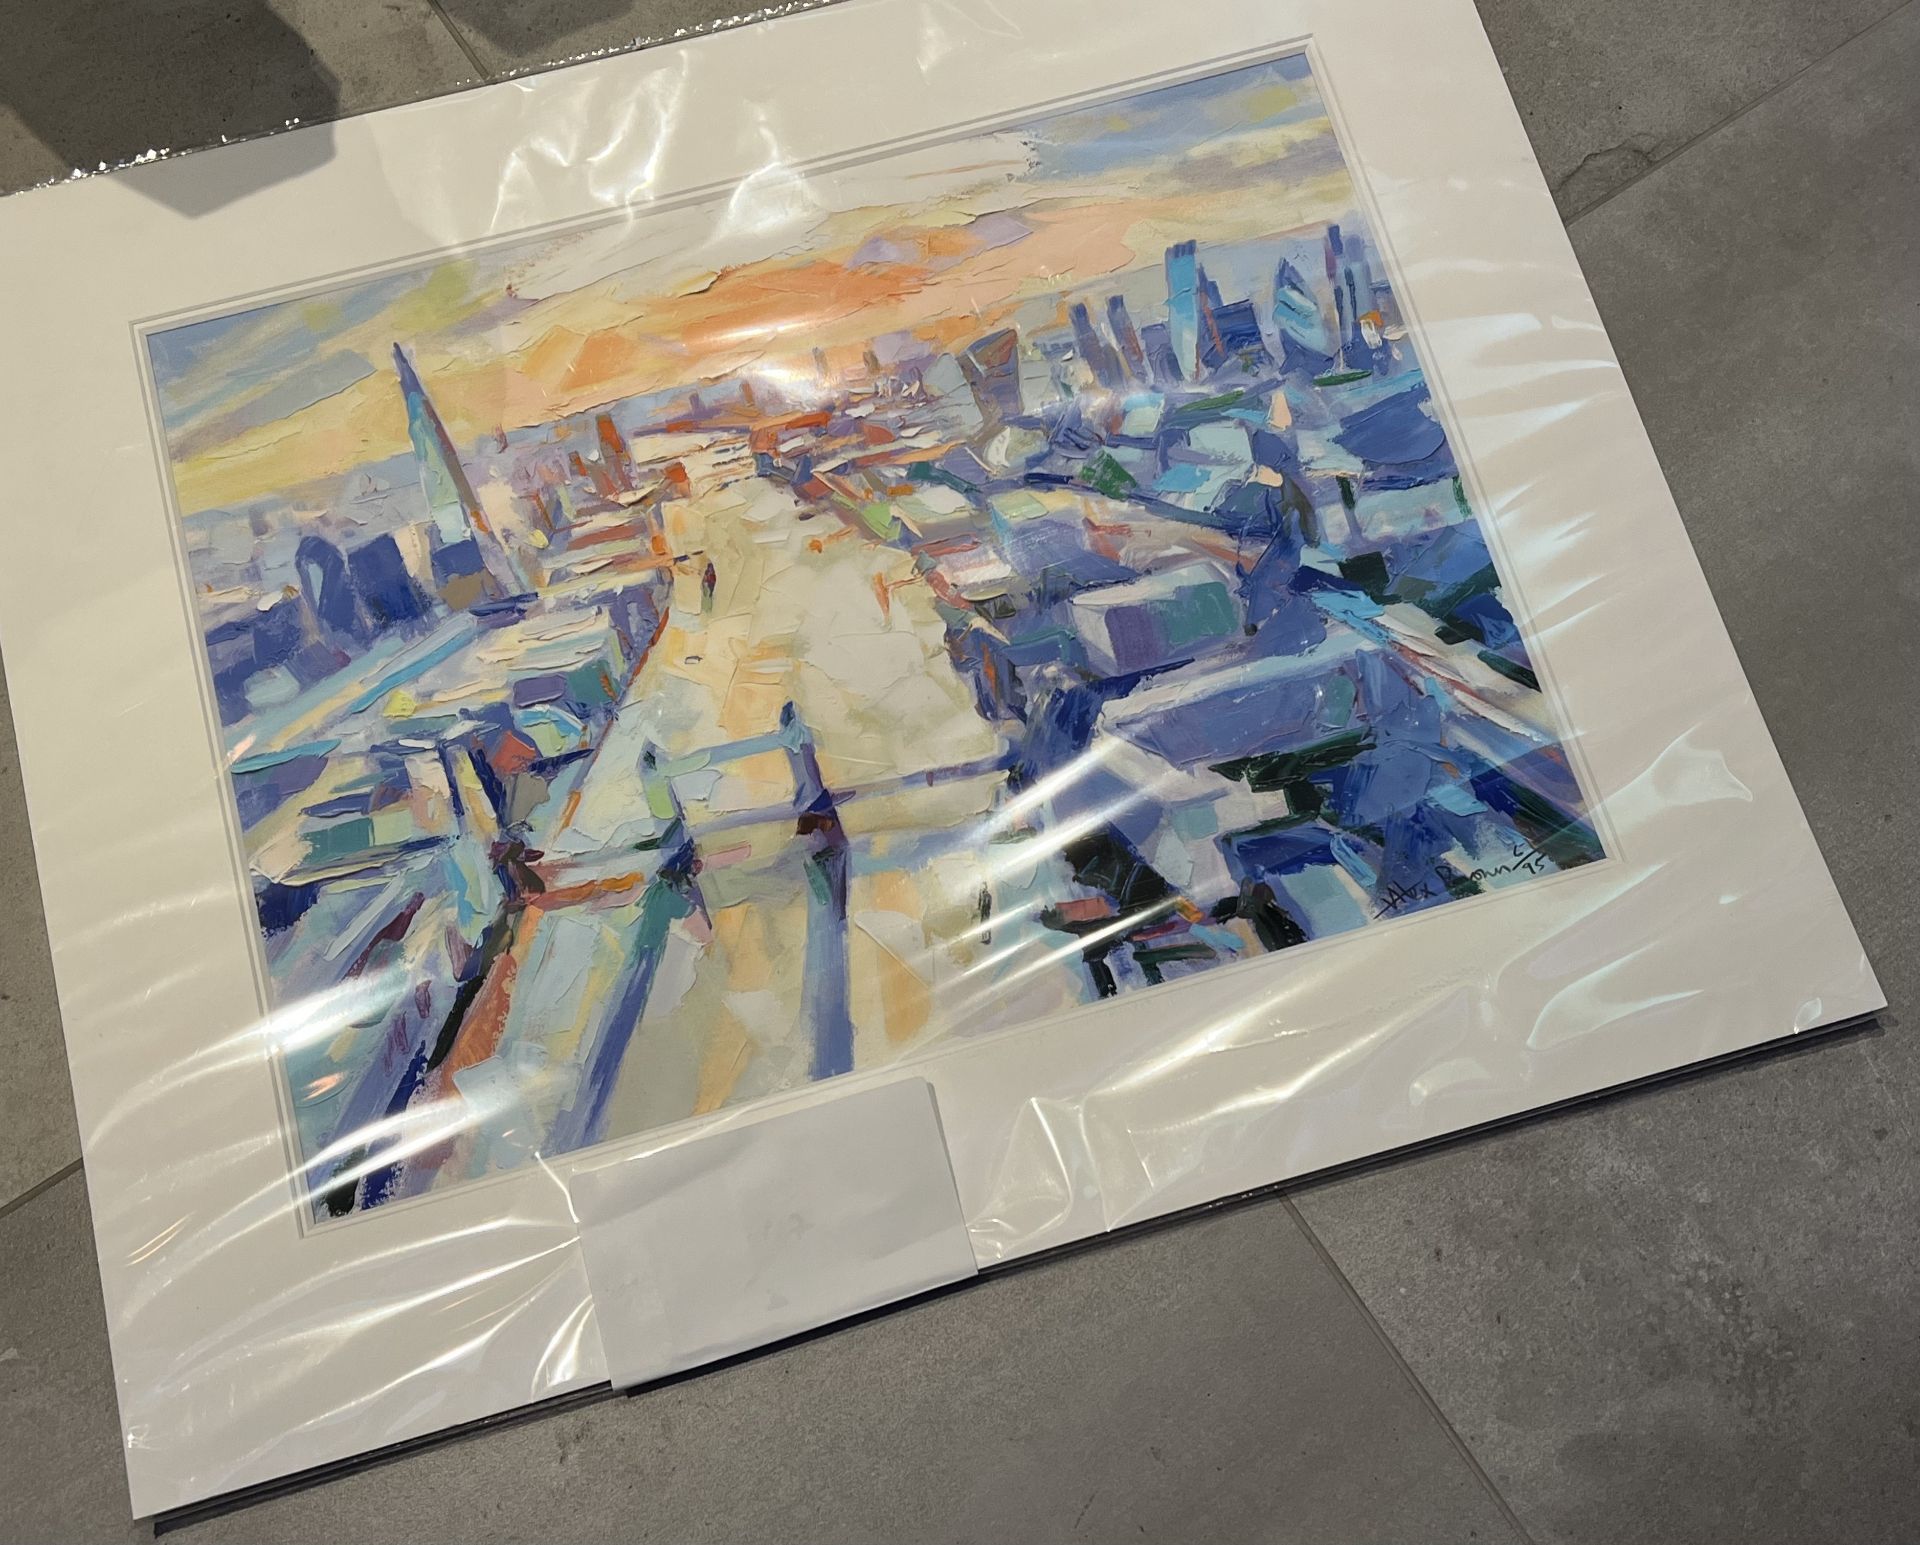 Authentic 'Alex Brown' print of 'London Bridge' - New - 1 of 95 Prints - RRP Â£165 - Image 2 of 5